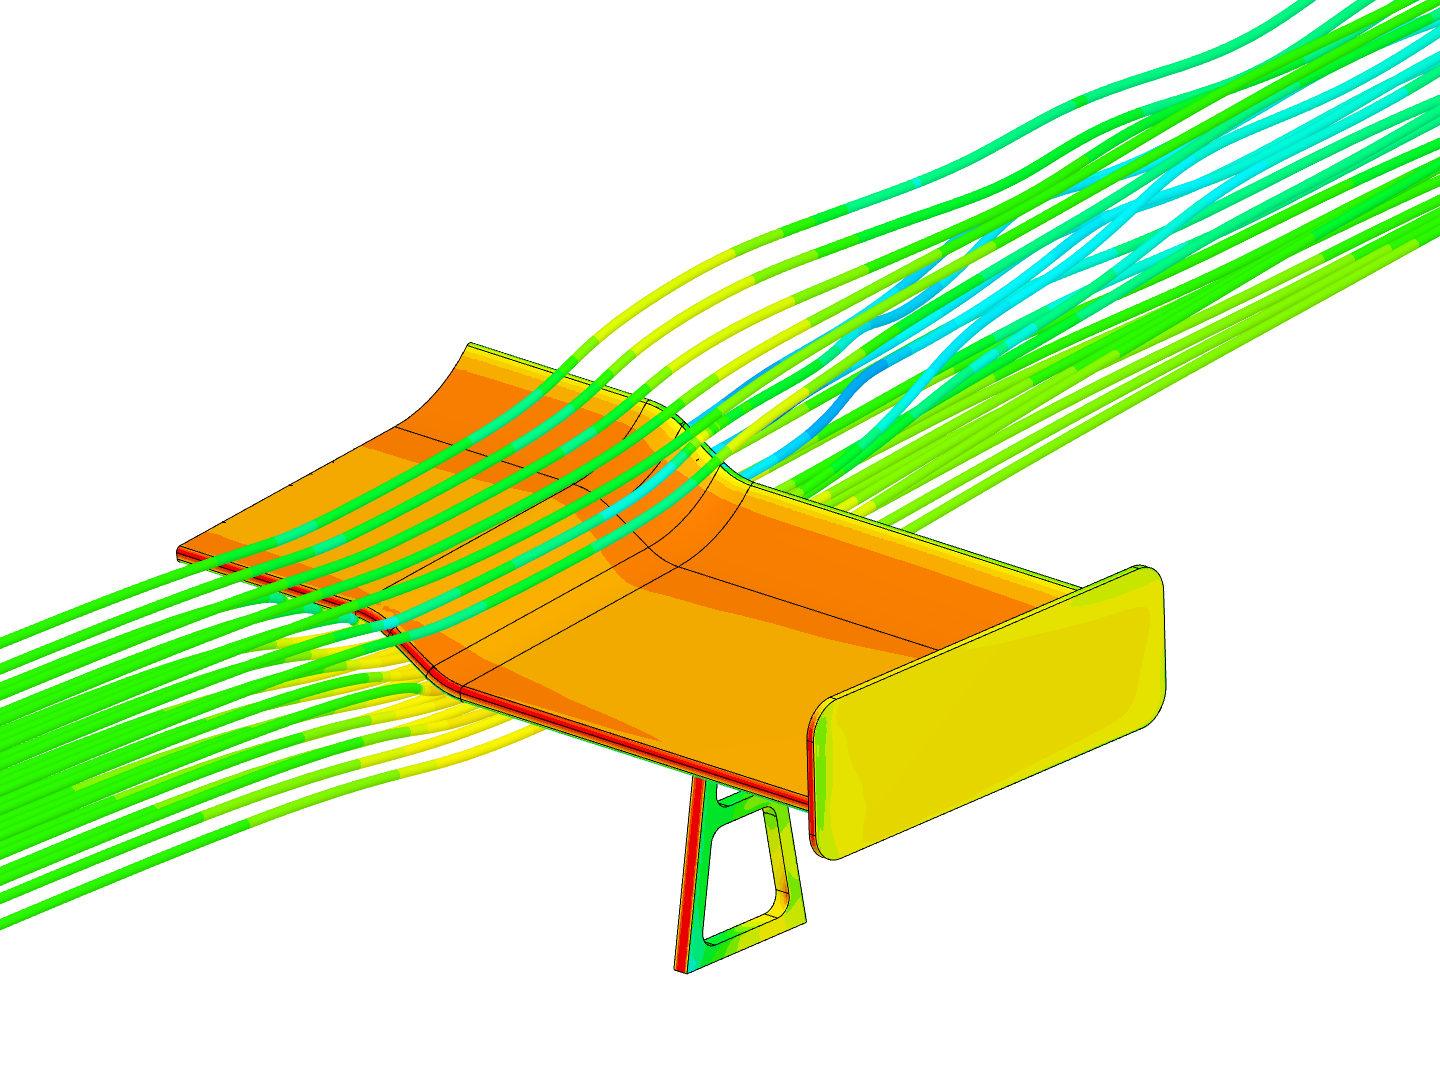 Airflow simulation image